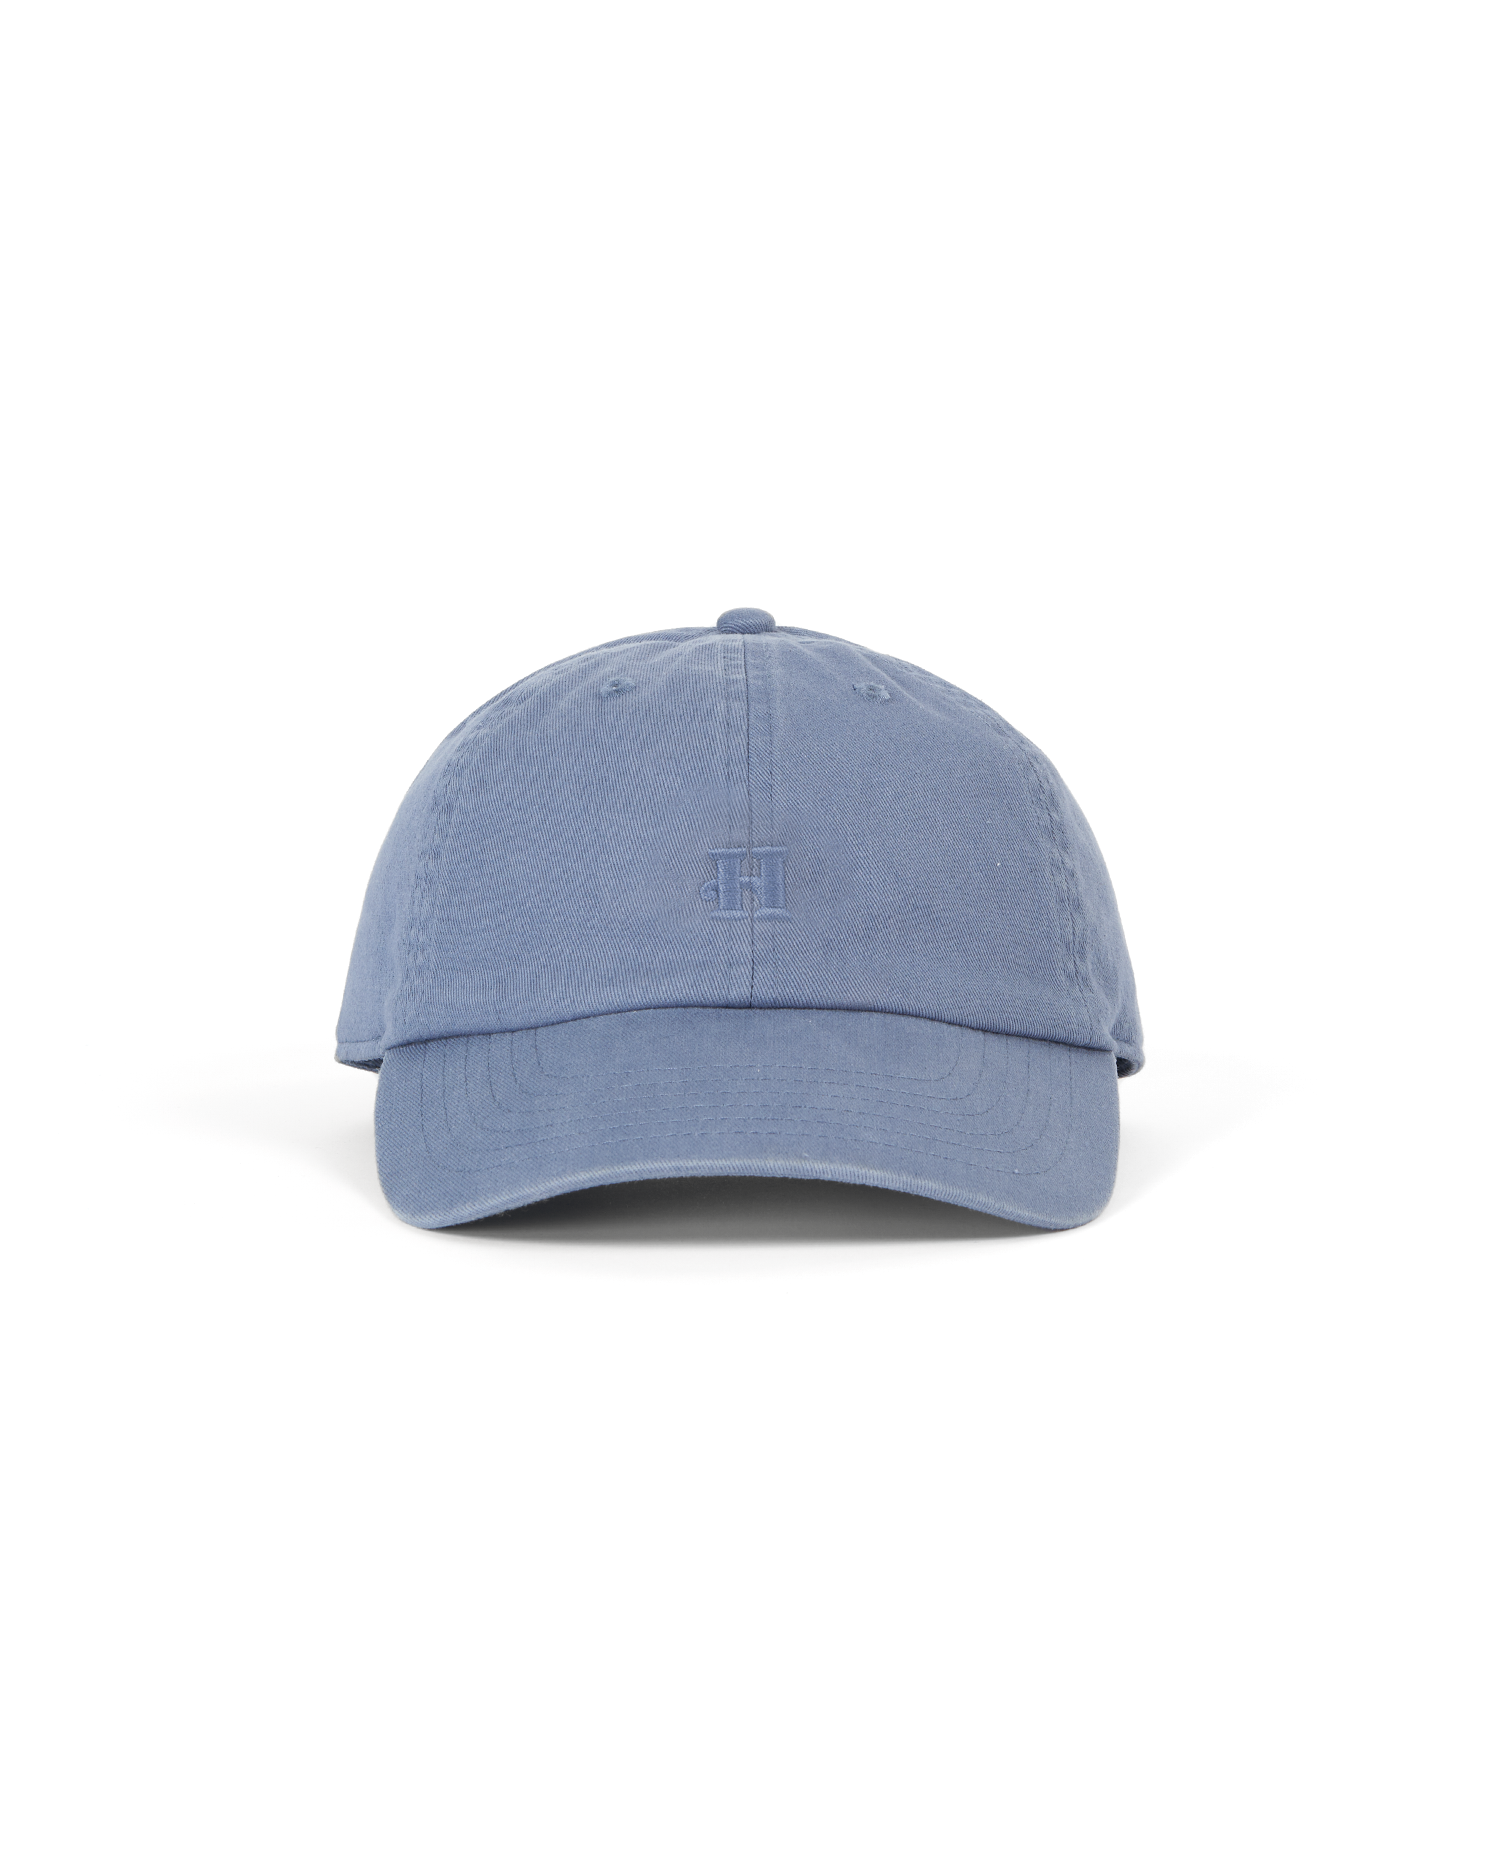 H Logo Hat - Blue Gray